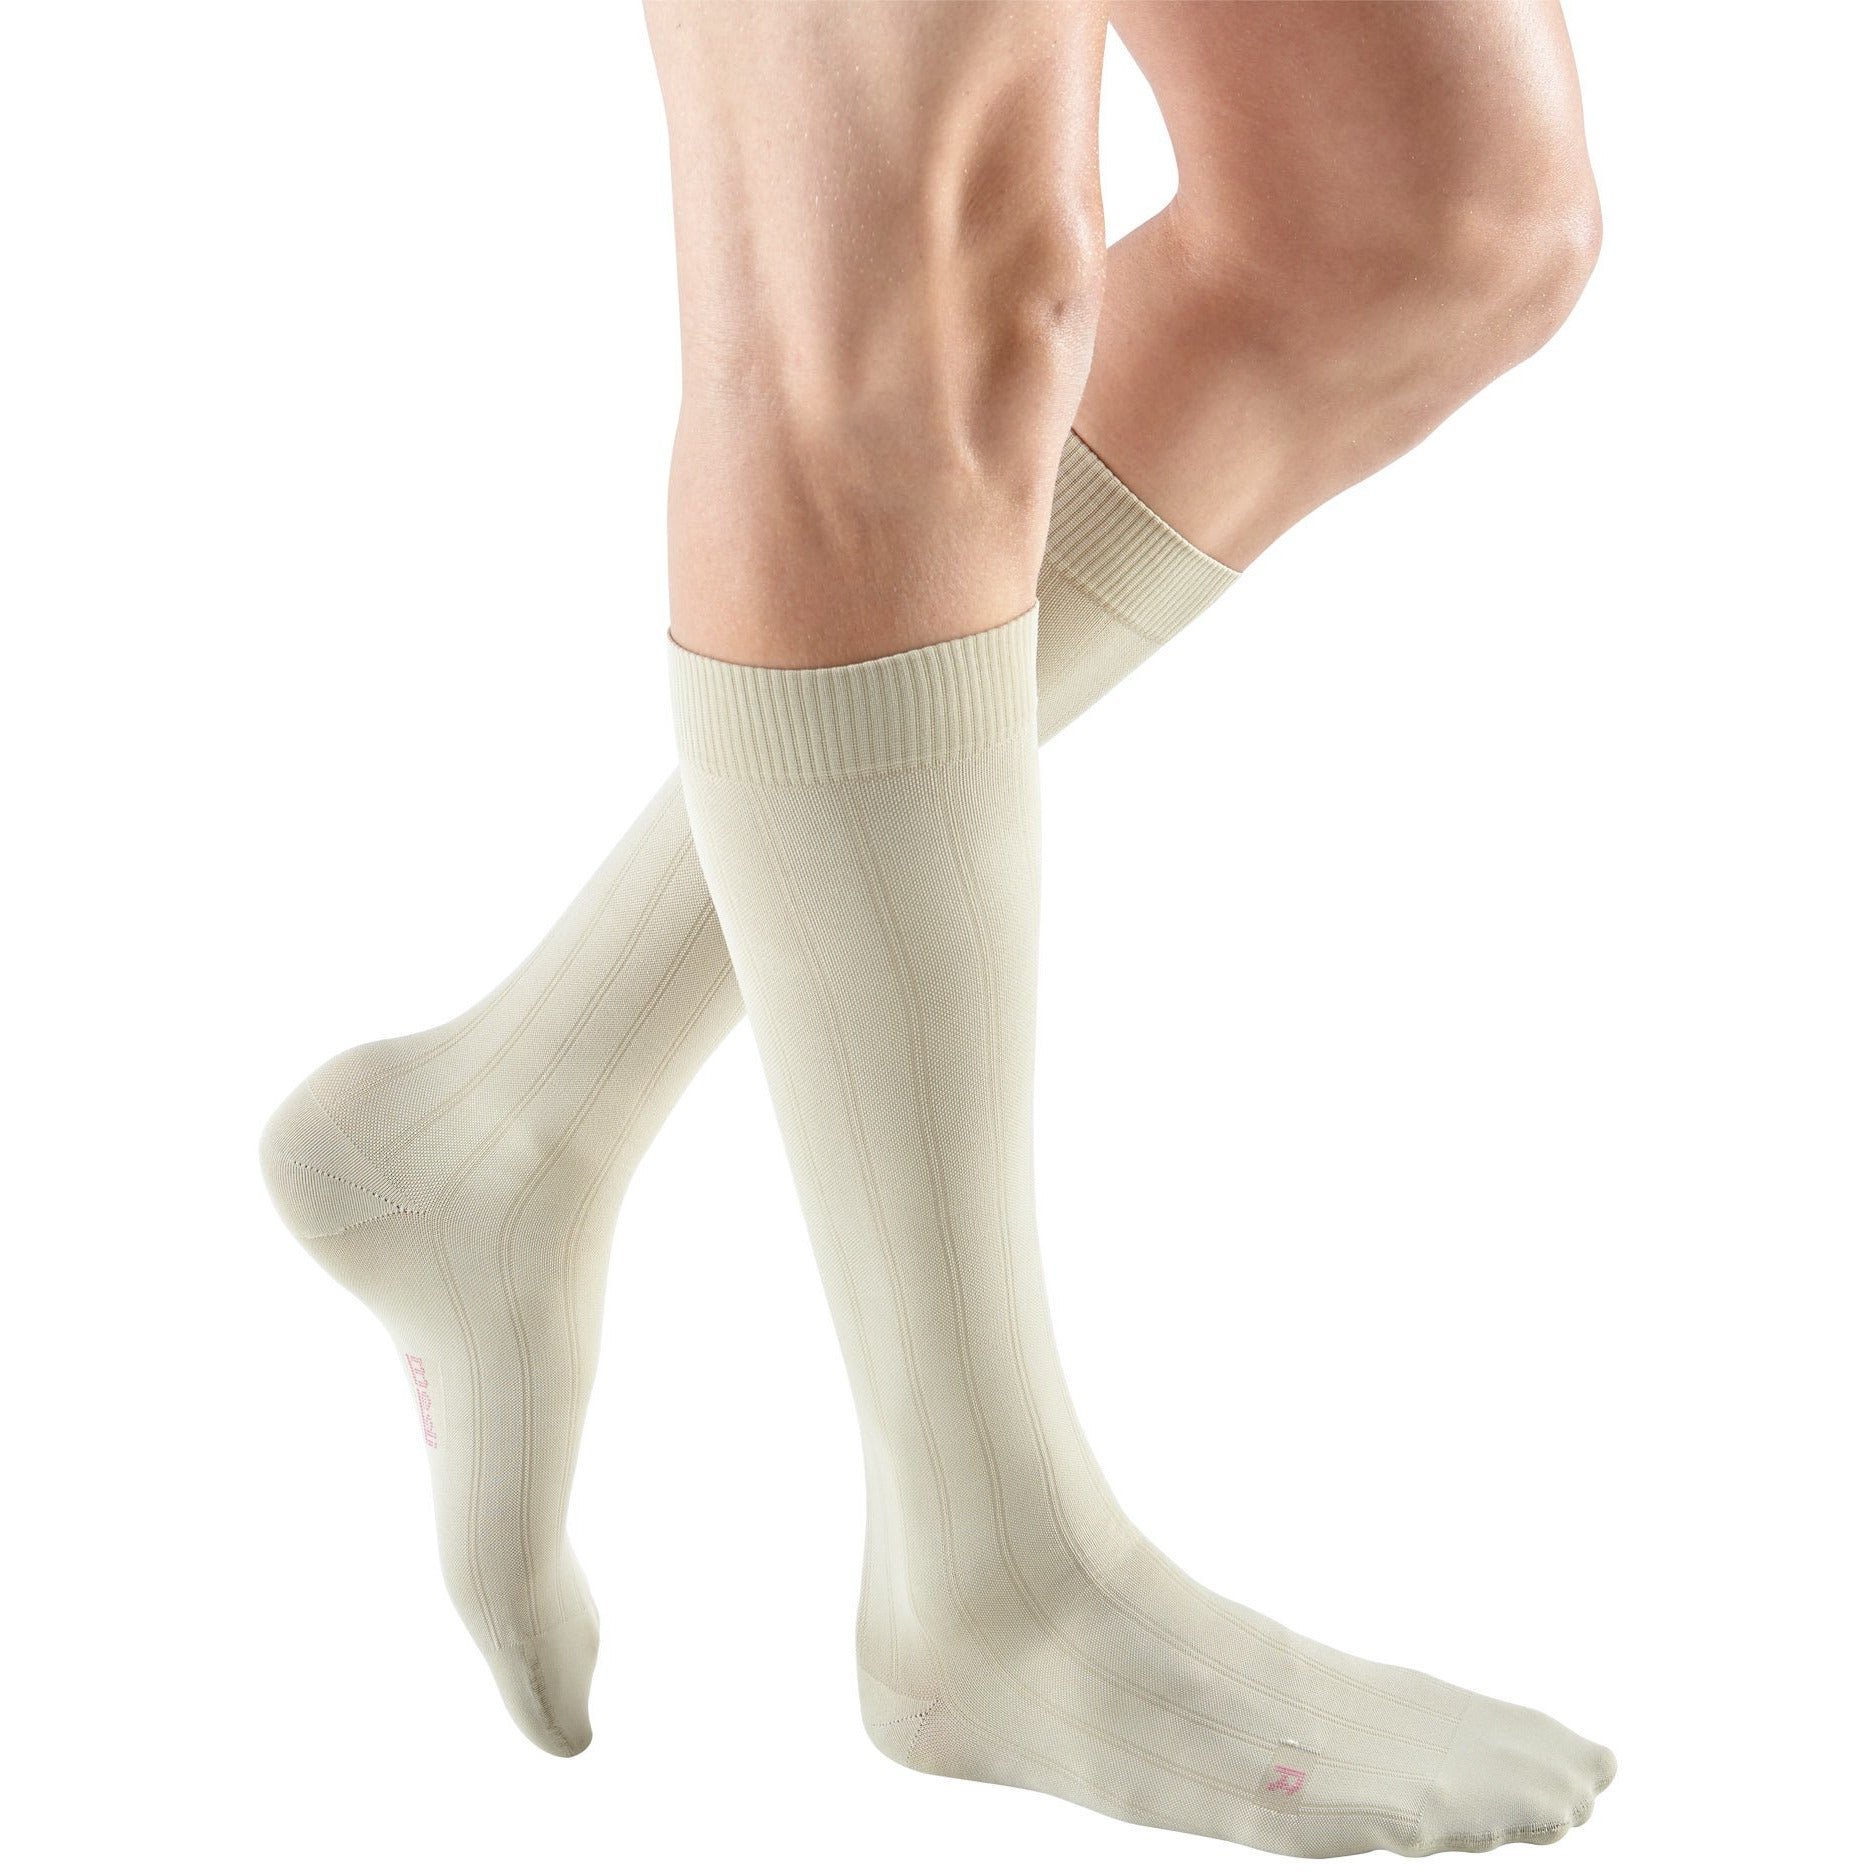 Mediven for Men Classic 20-30 mmHg Knee High, Extra Wide Calf, Tan